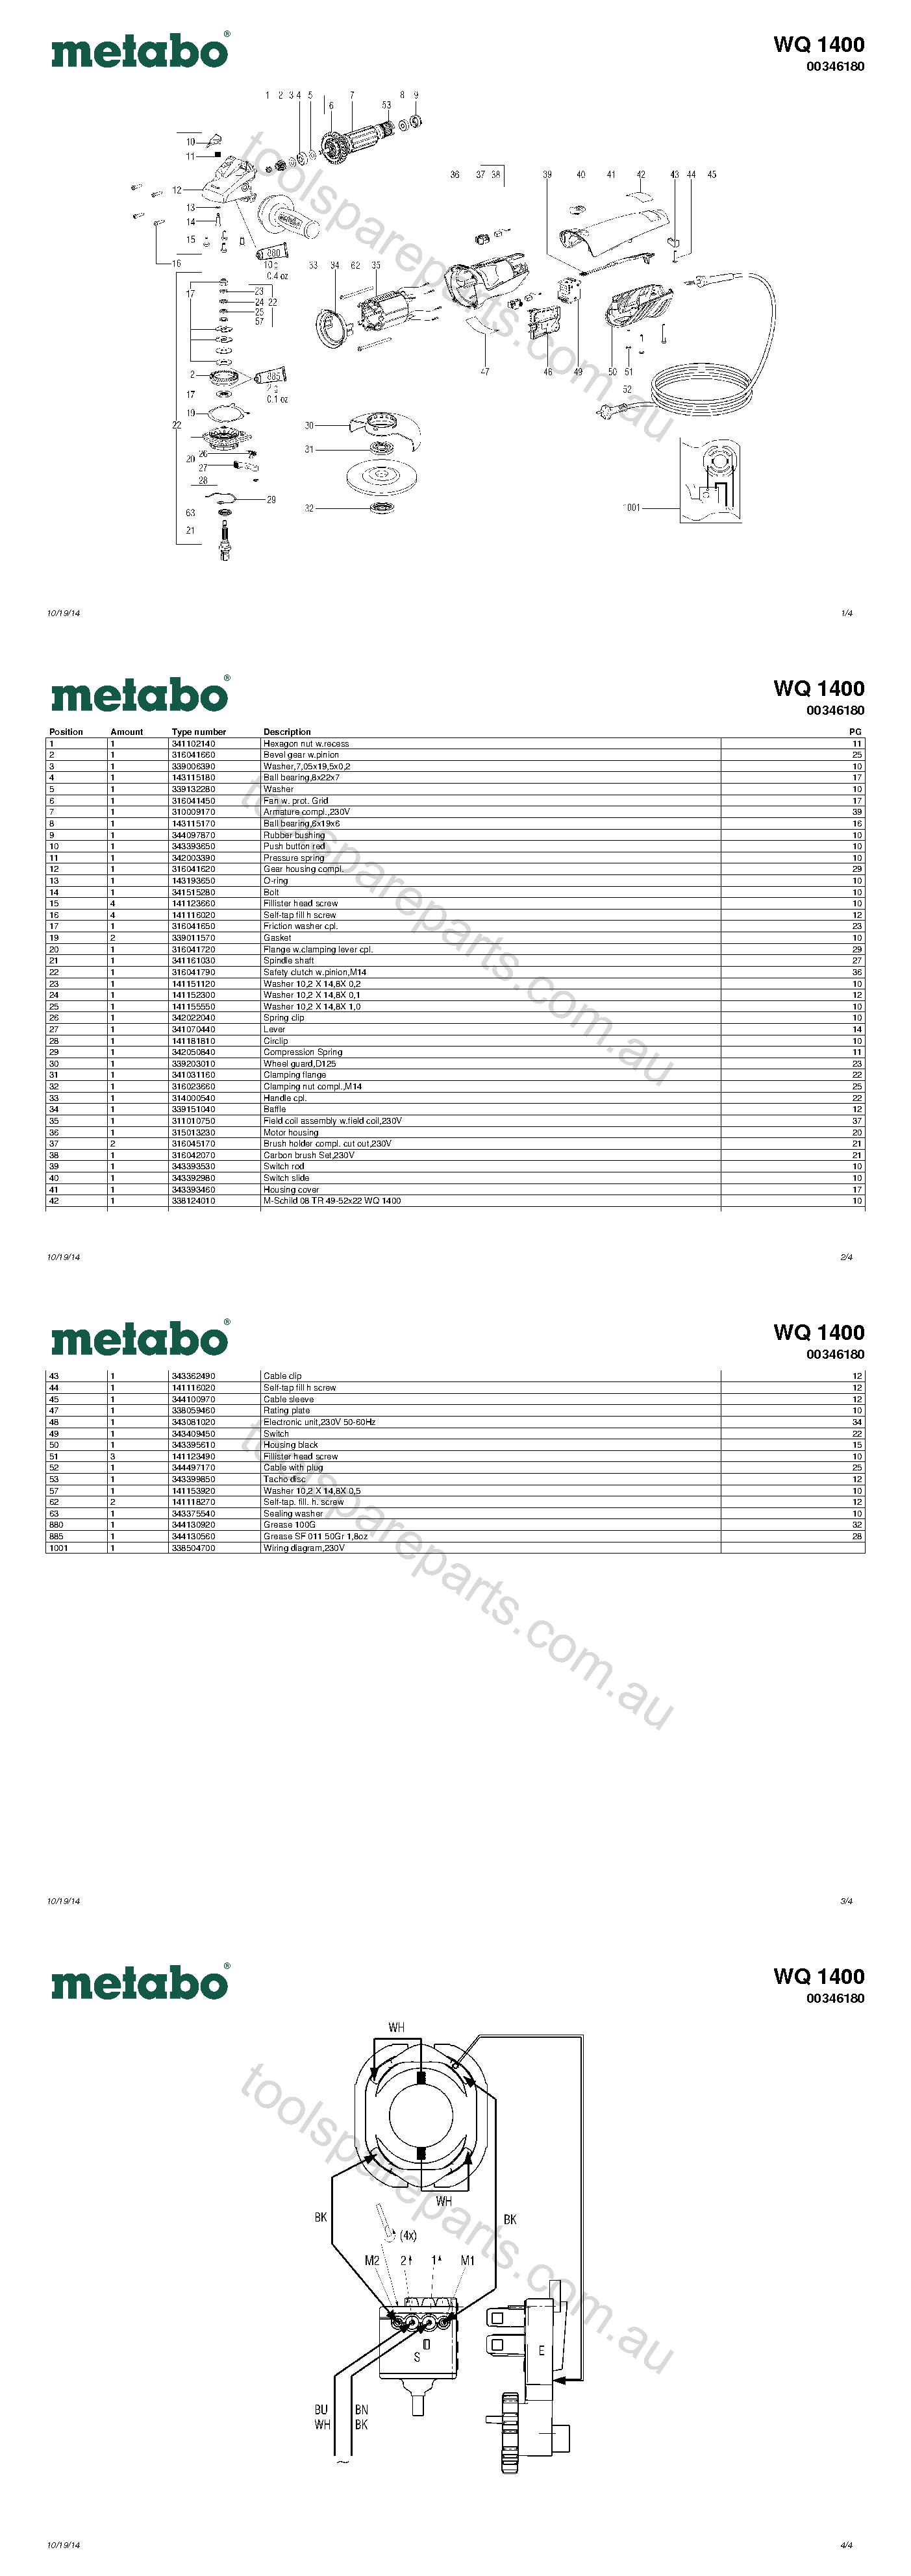 Metabo WQ 1400 00346180  Diagram 1